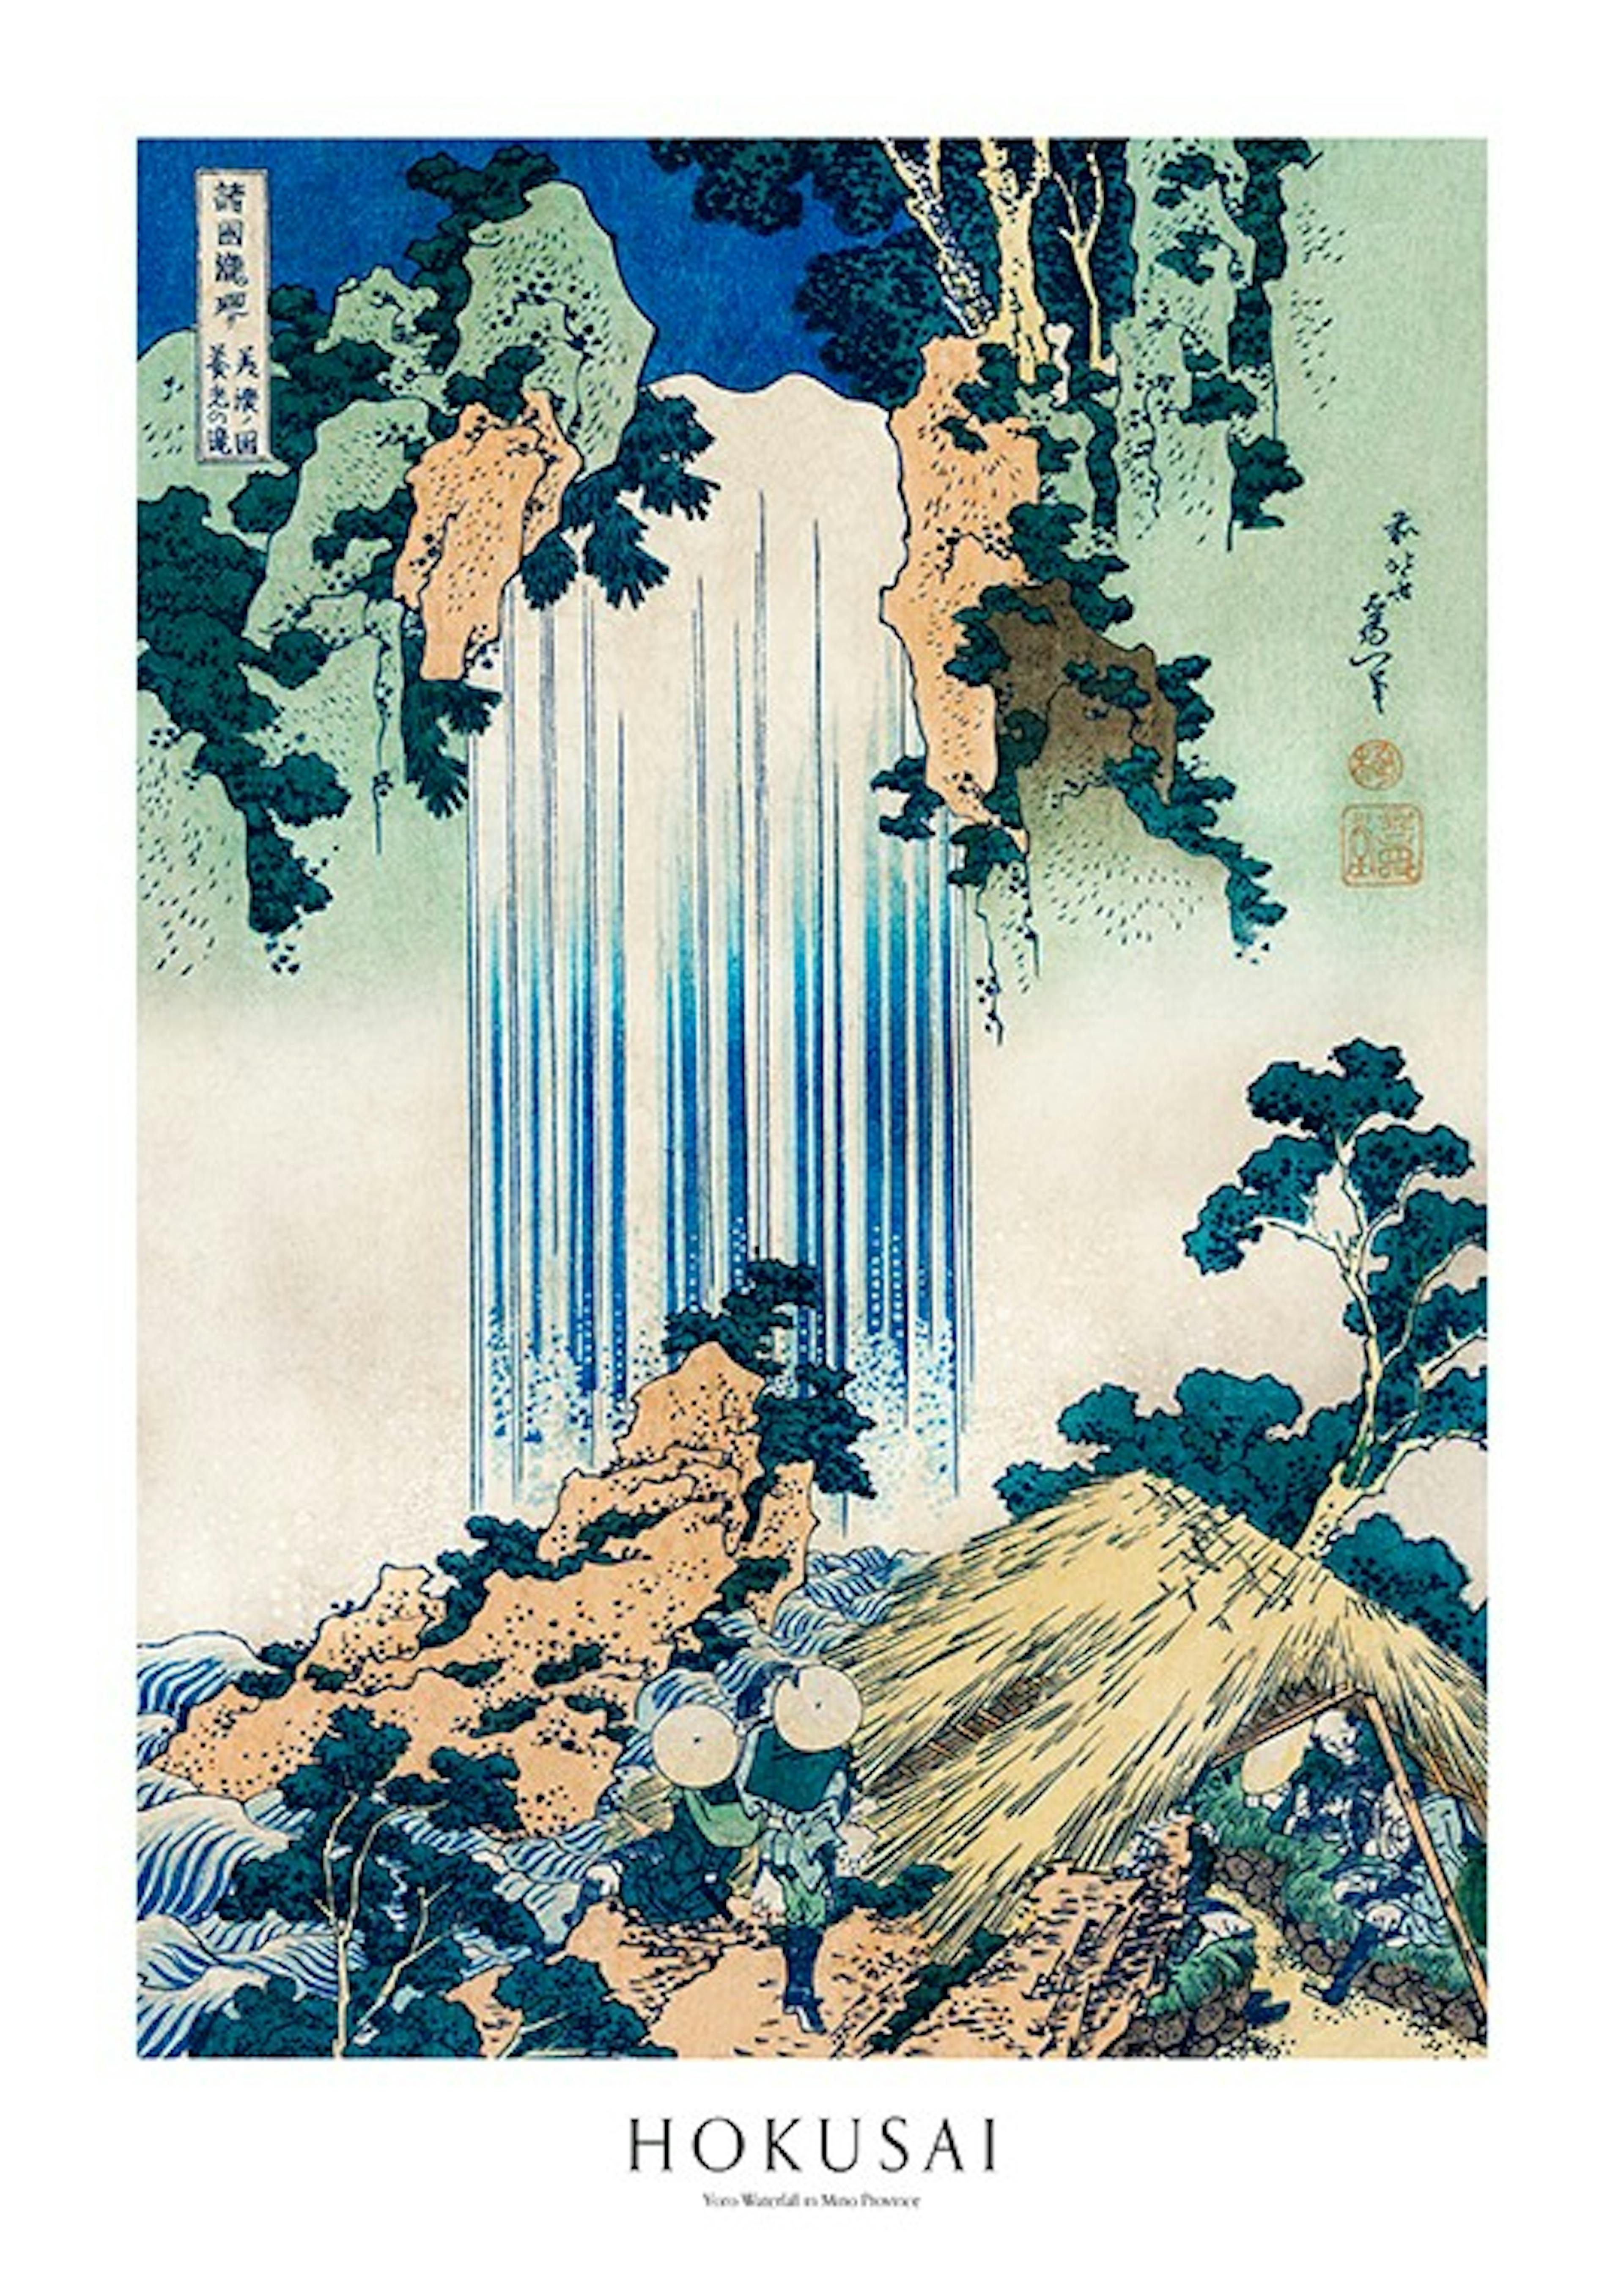 Hokusai - Yoro Waterfall in Mino Province Juliste 0